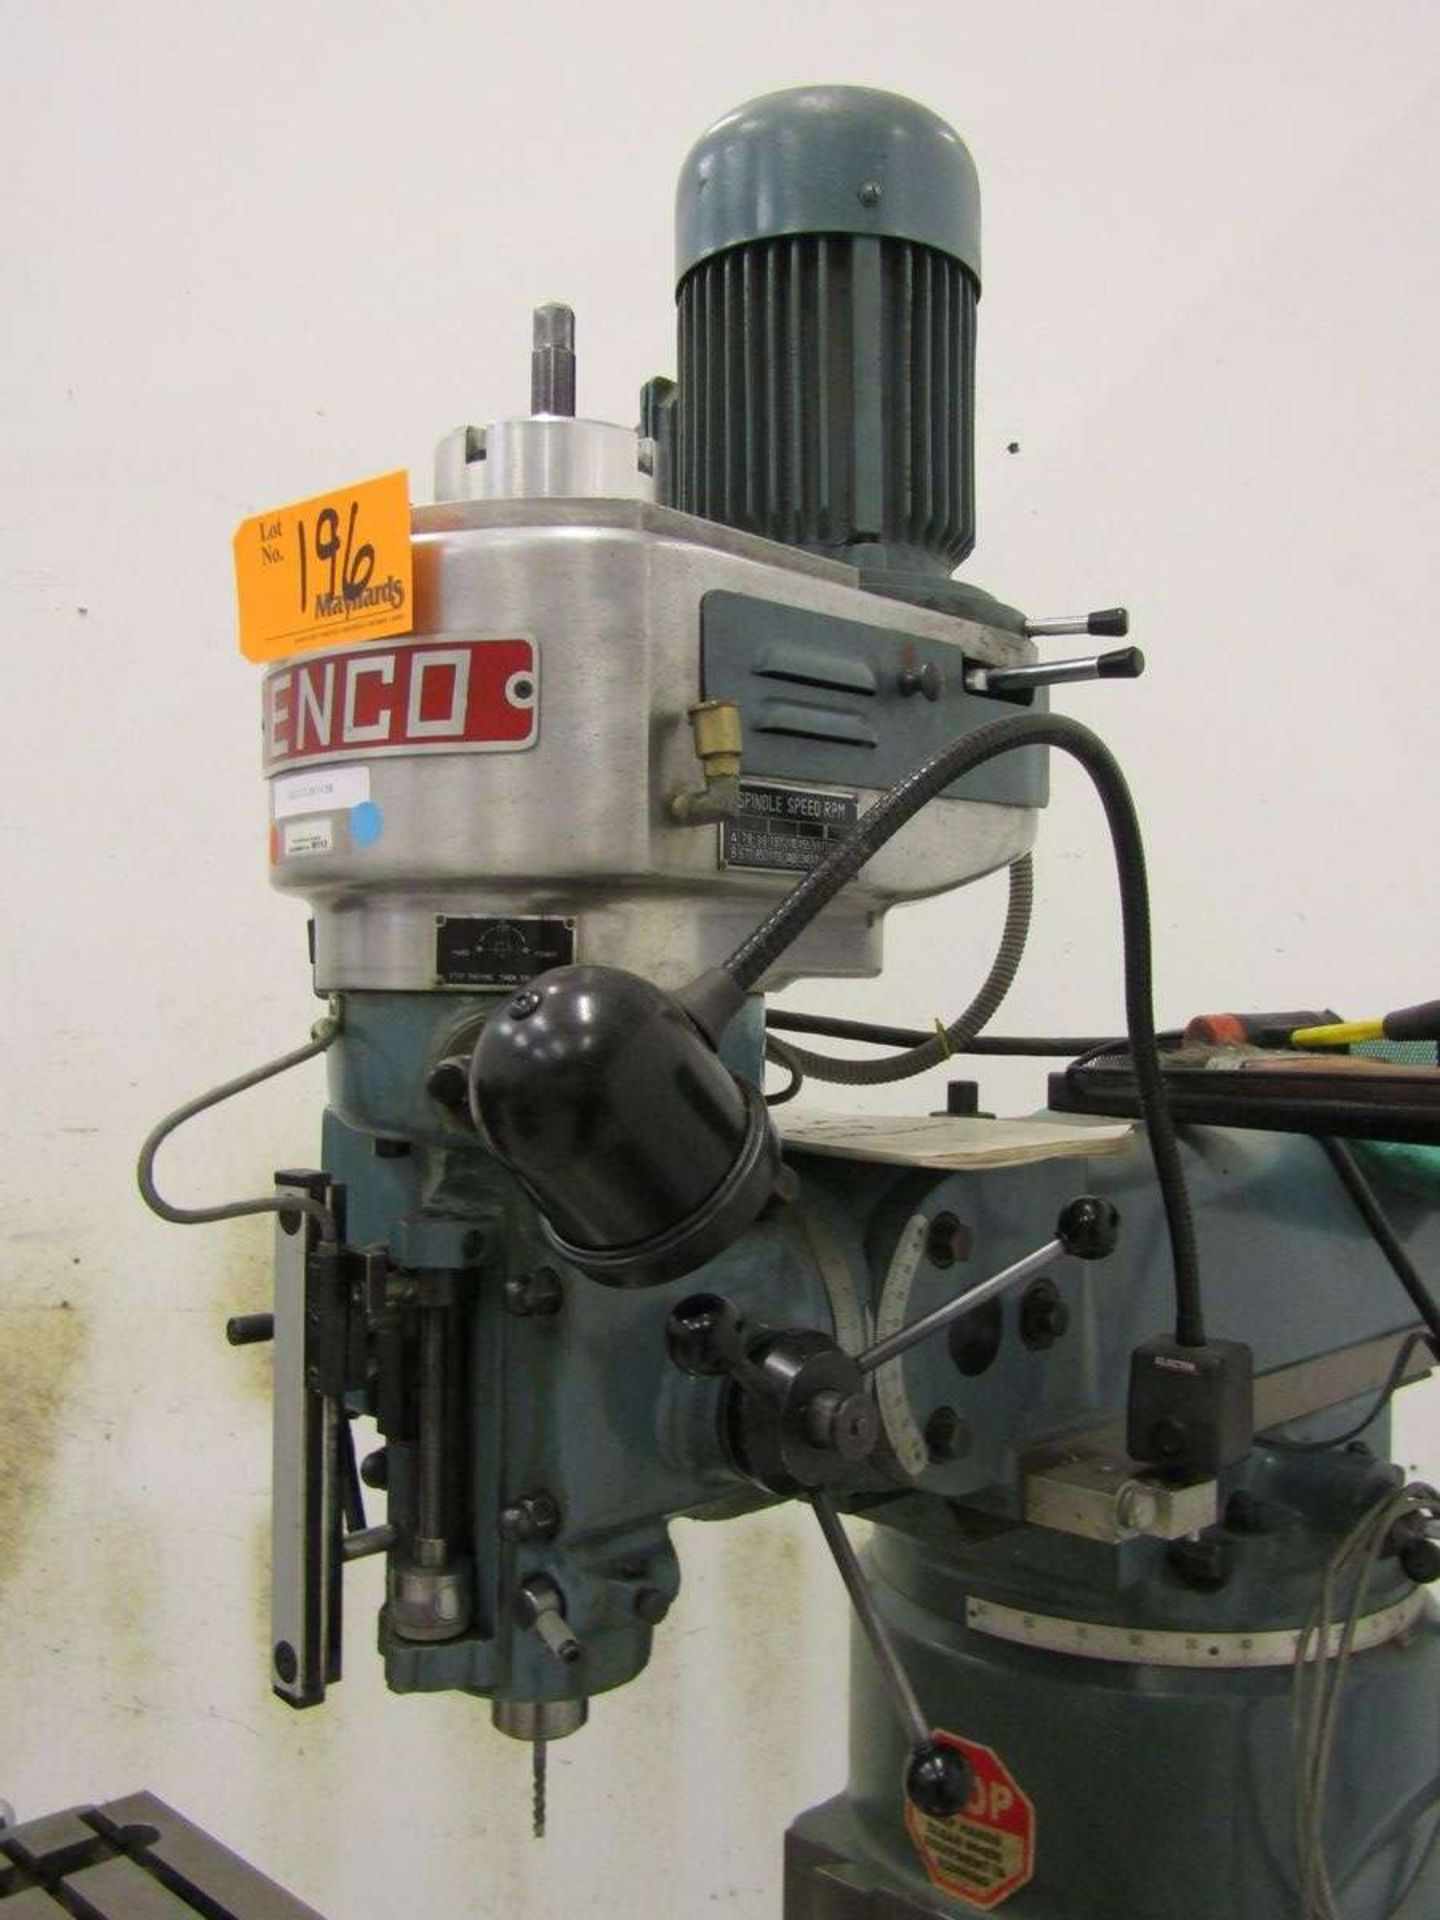 1996 Enco 100-1597 Vertical Milling Machine - Image 2 of 8